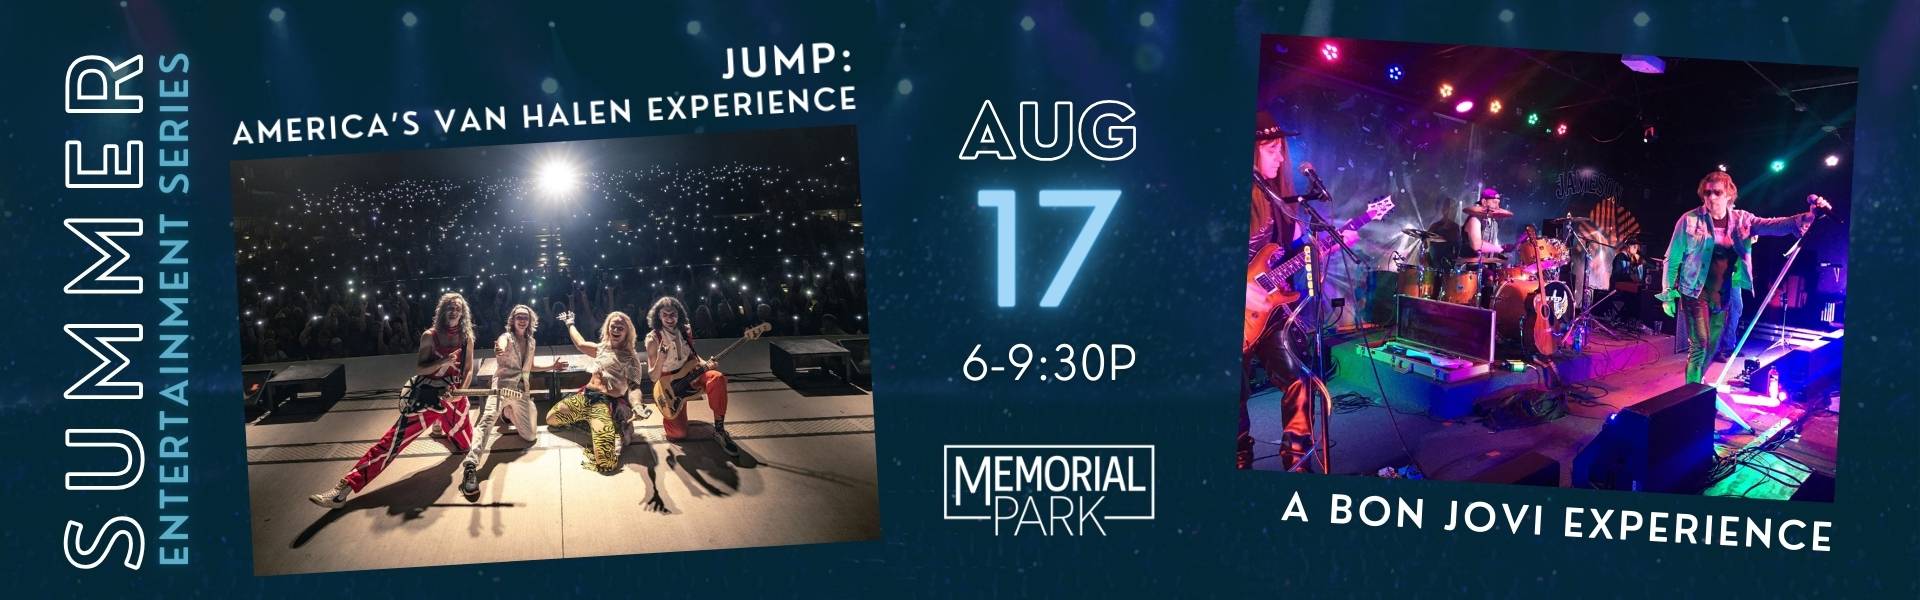 Memorial Park performance featuring Jump: America's Van Halen and A Bon Jovi Experience